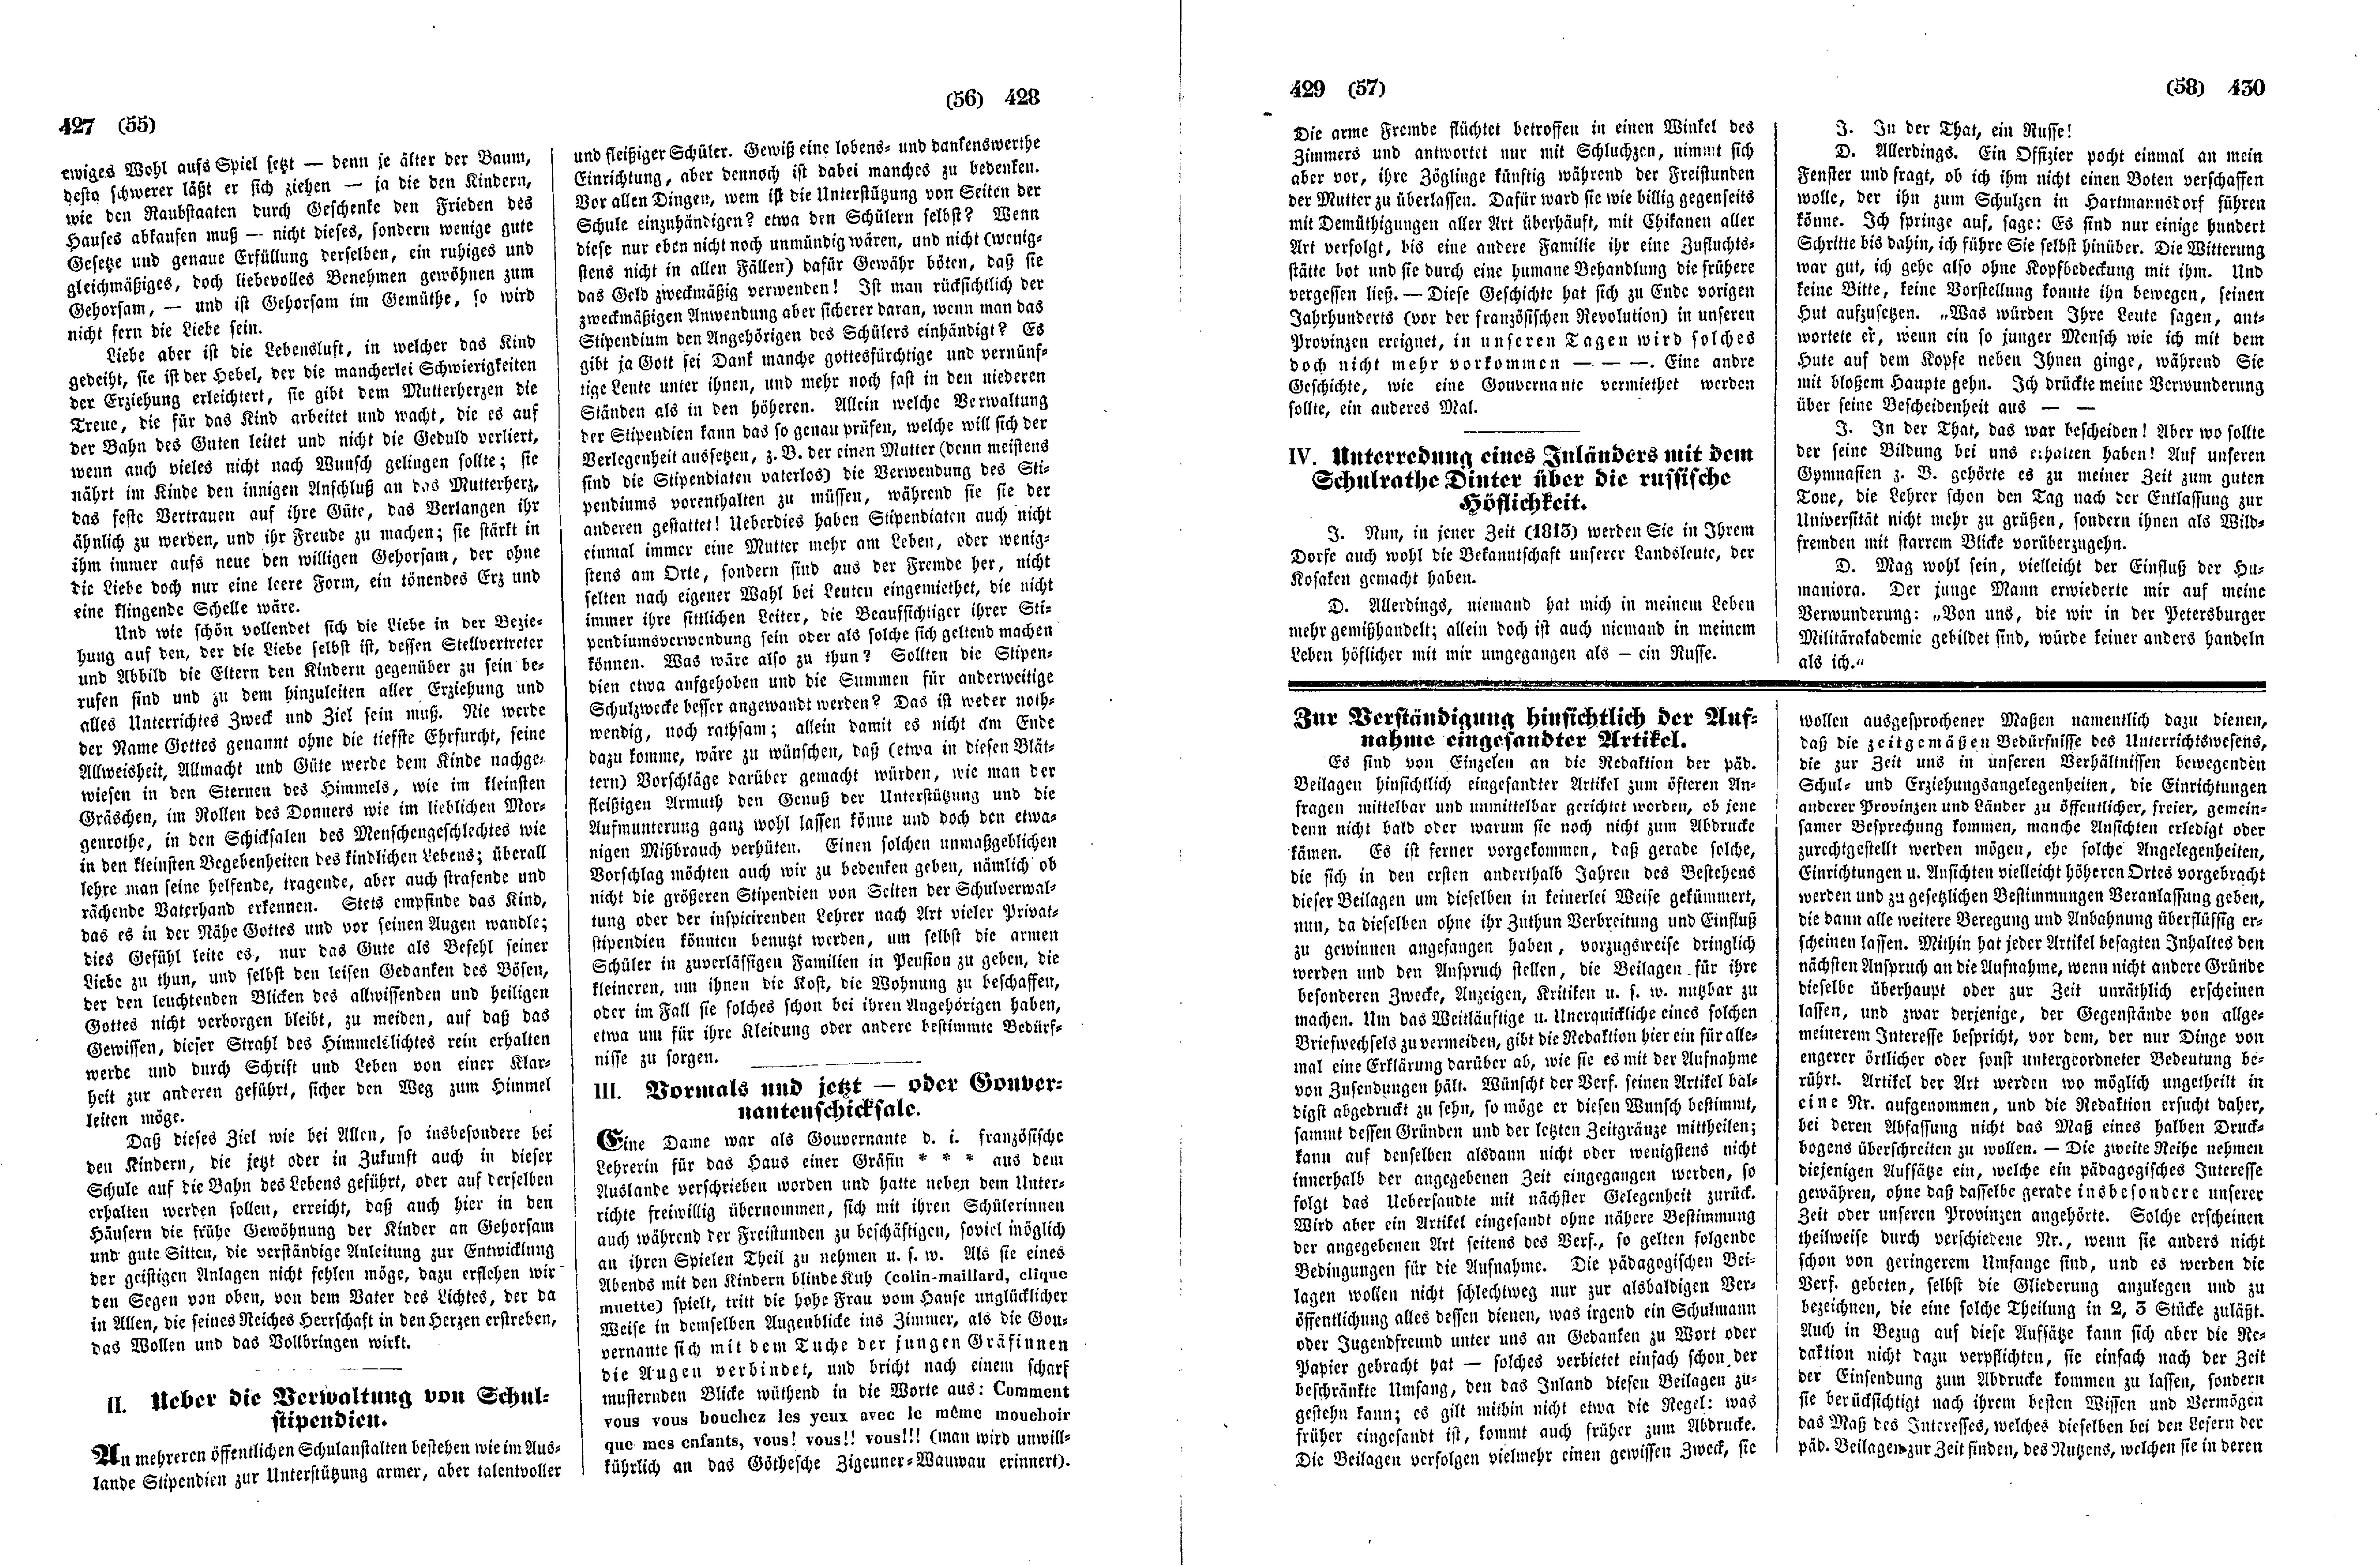 Das Inland [12] (1847) | 112. (427-430) Main body of text